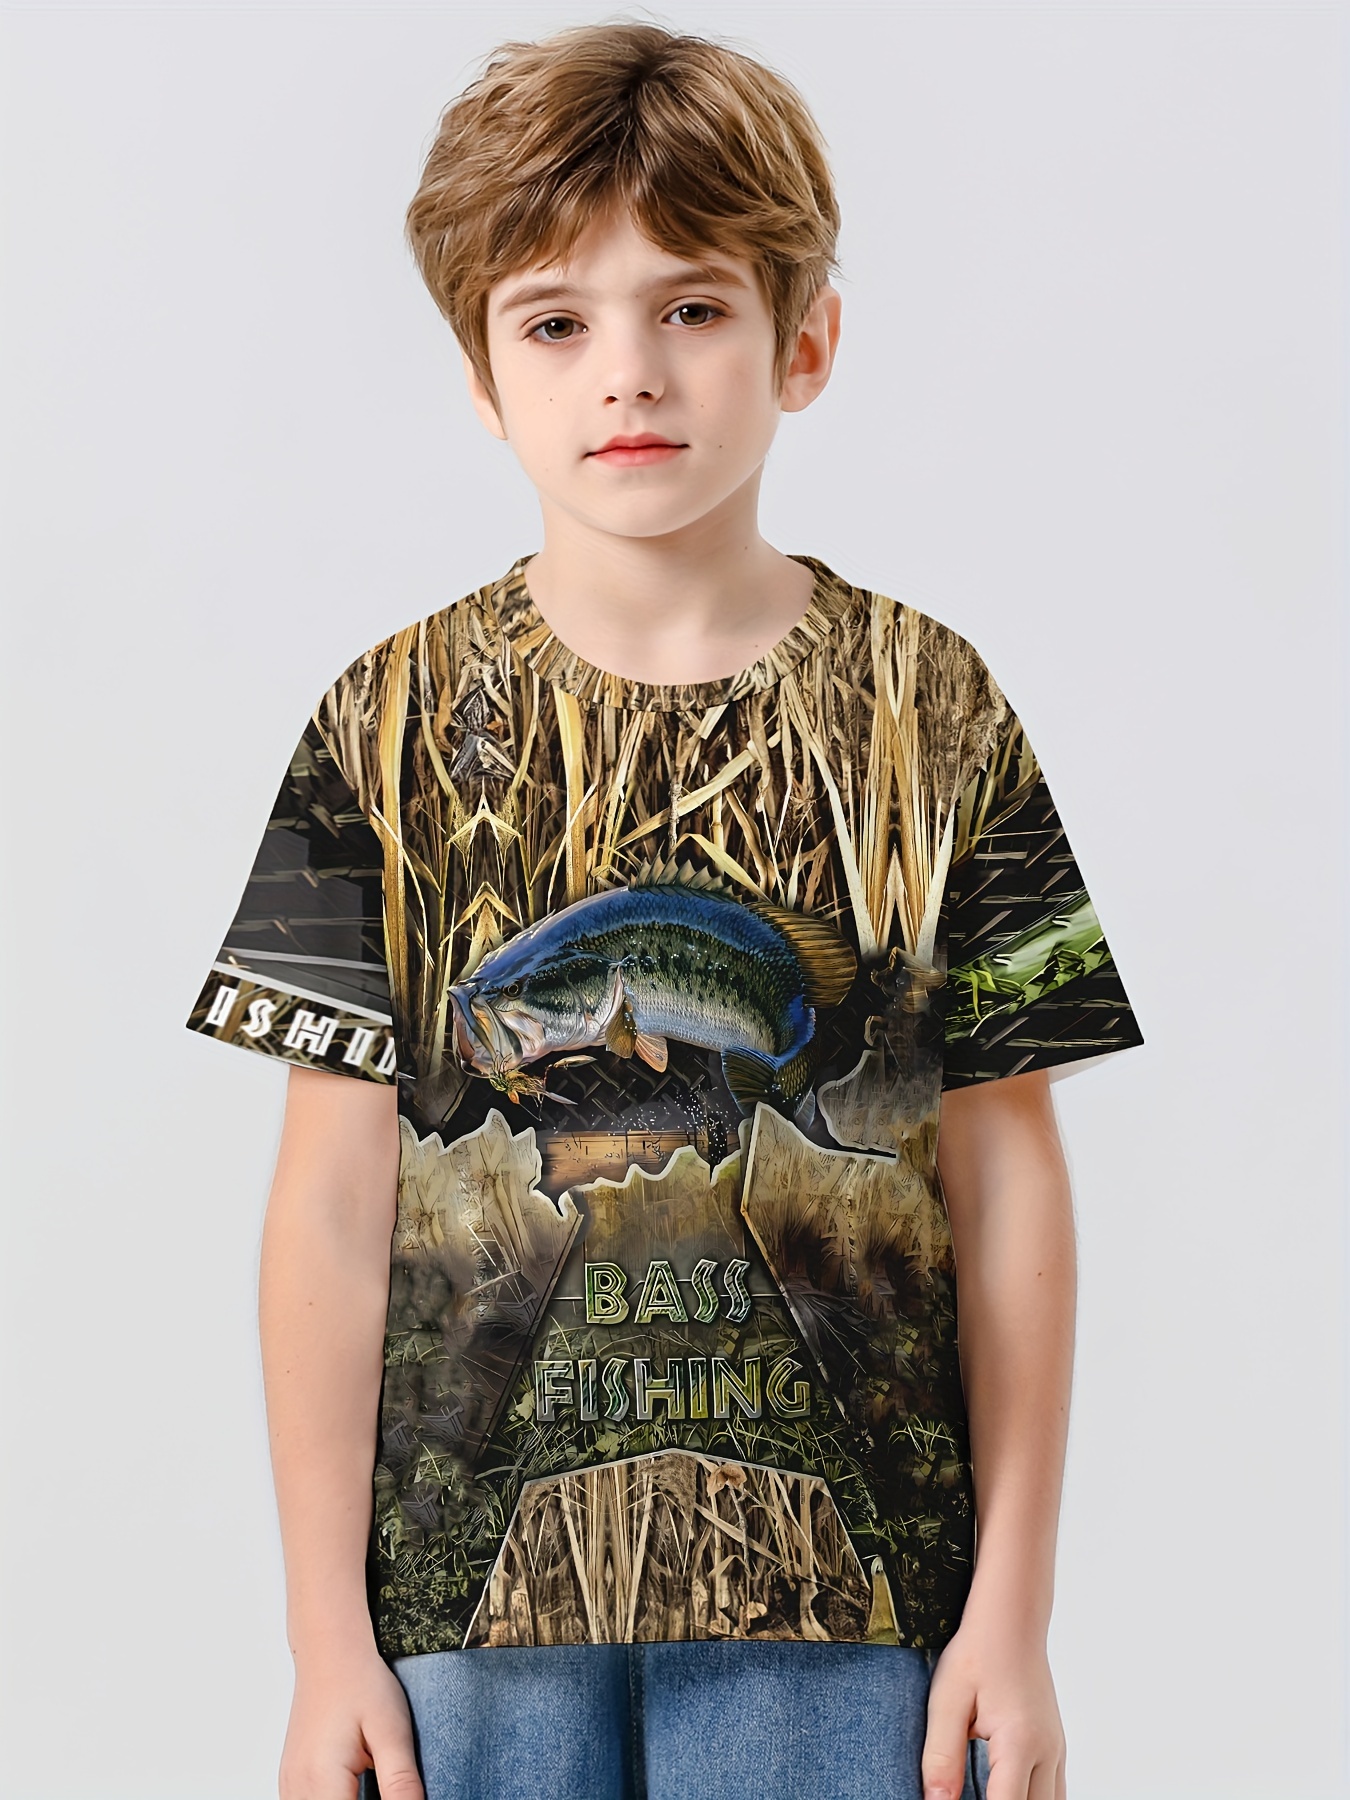 Kids Fishing Shirts, Boys Fishing Shirts